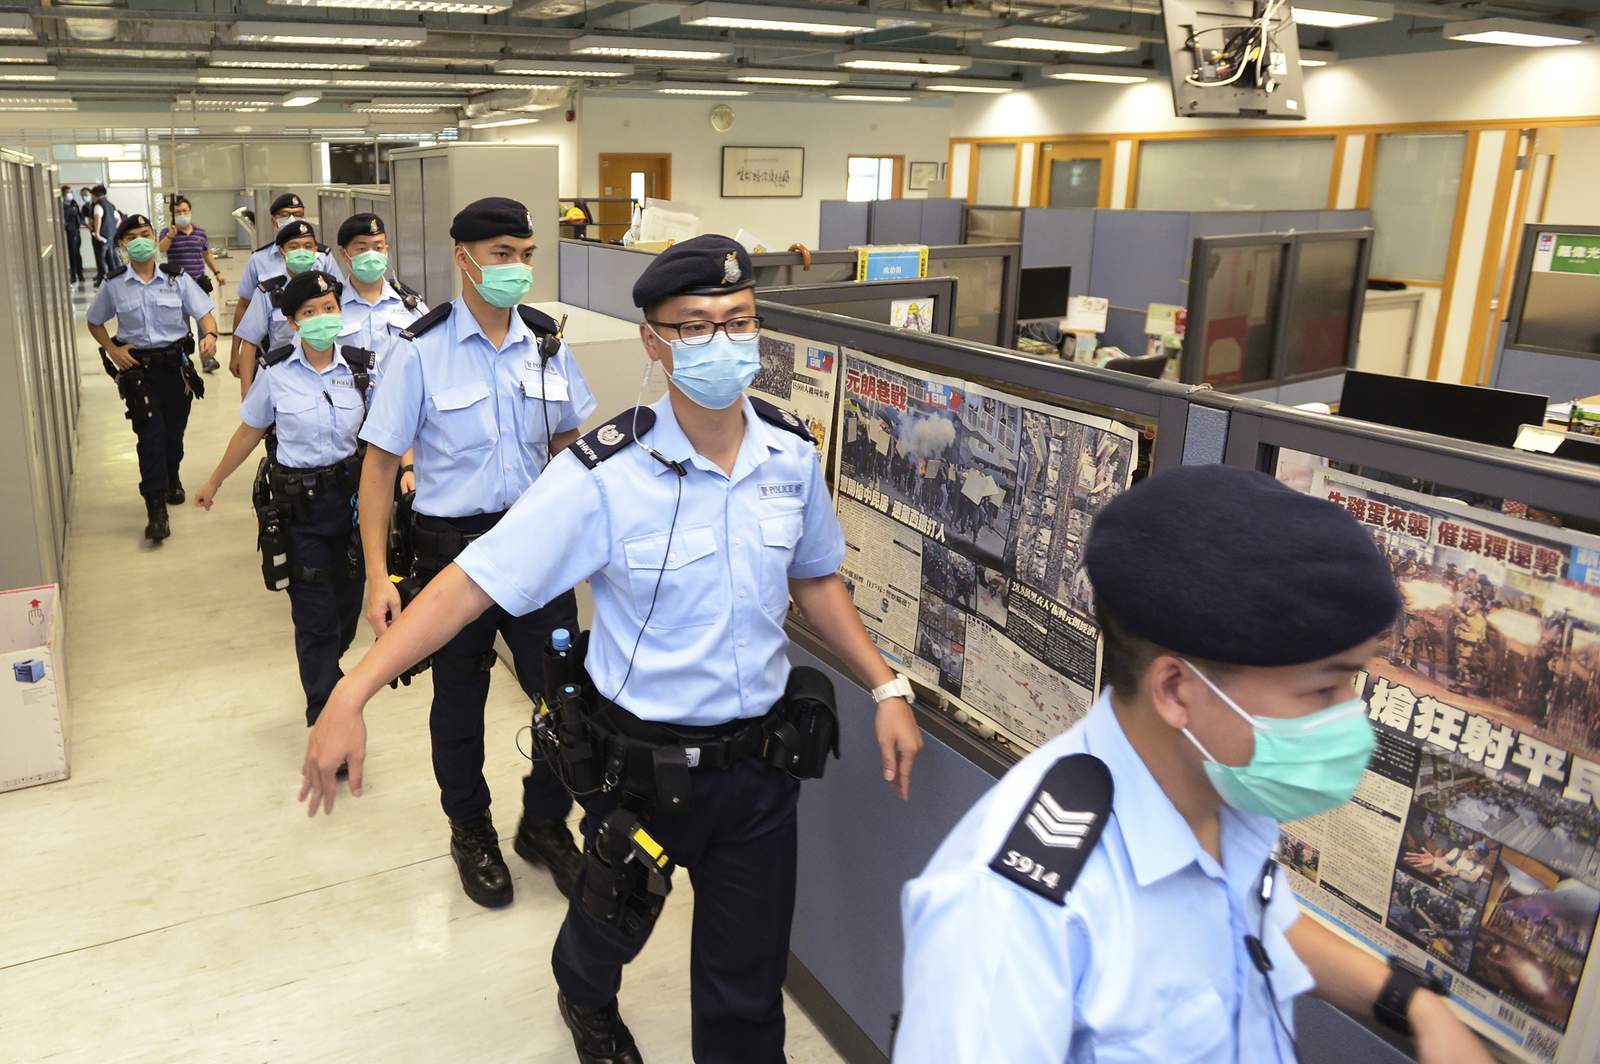 UN experts raise concerns over Hong Kong security law